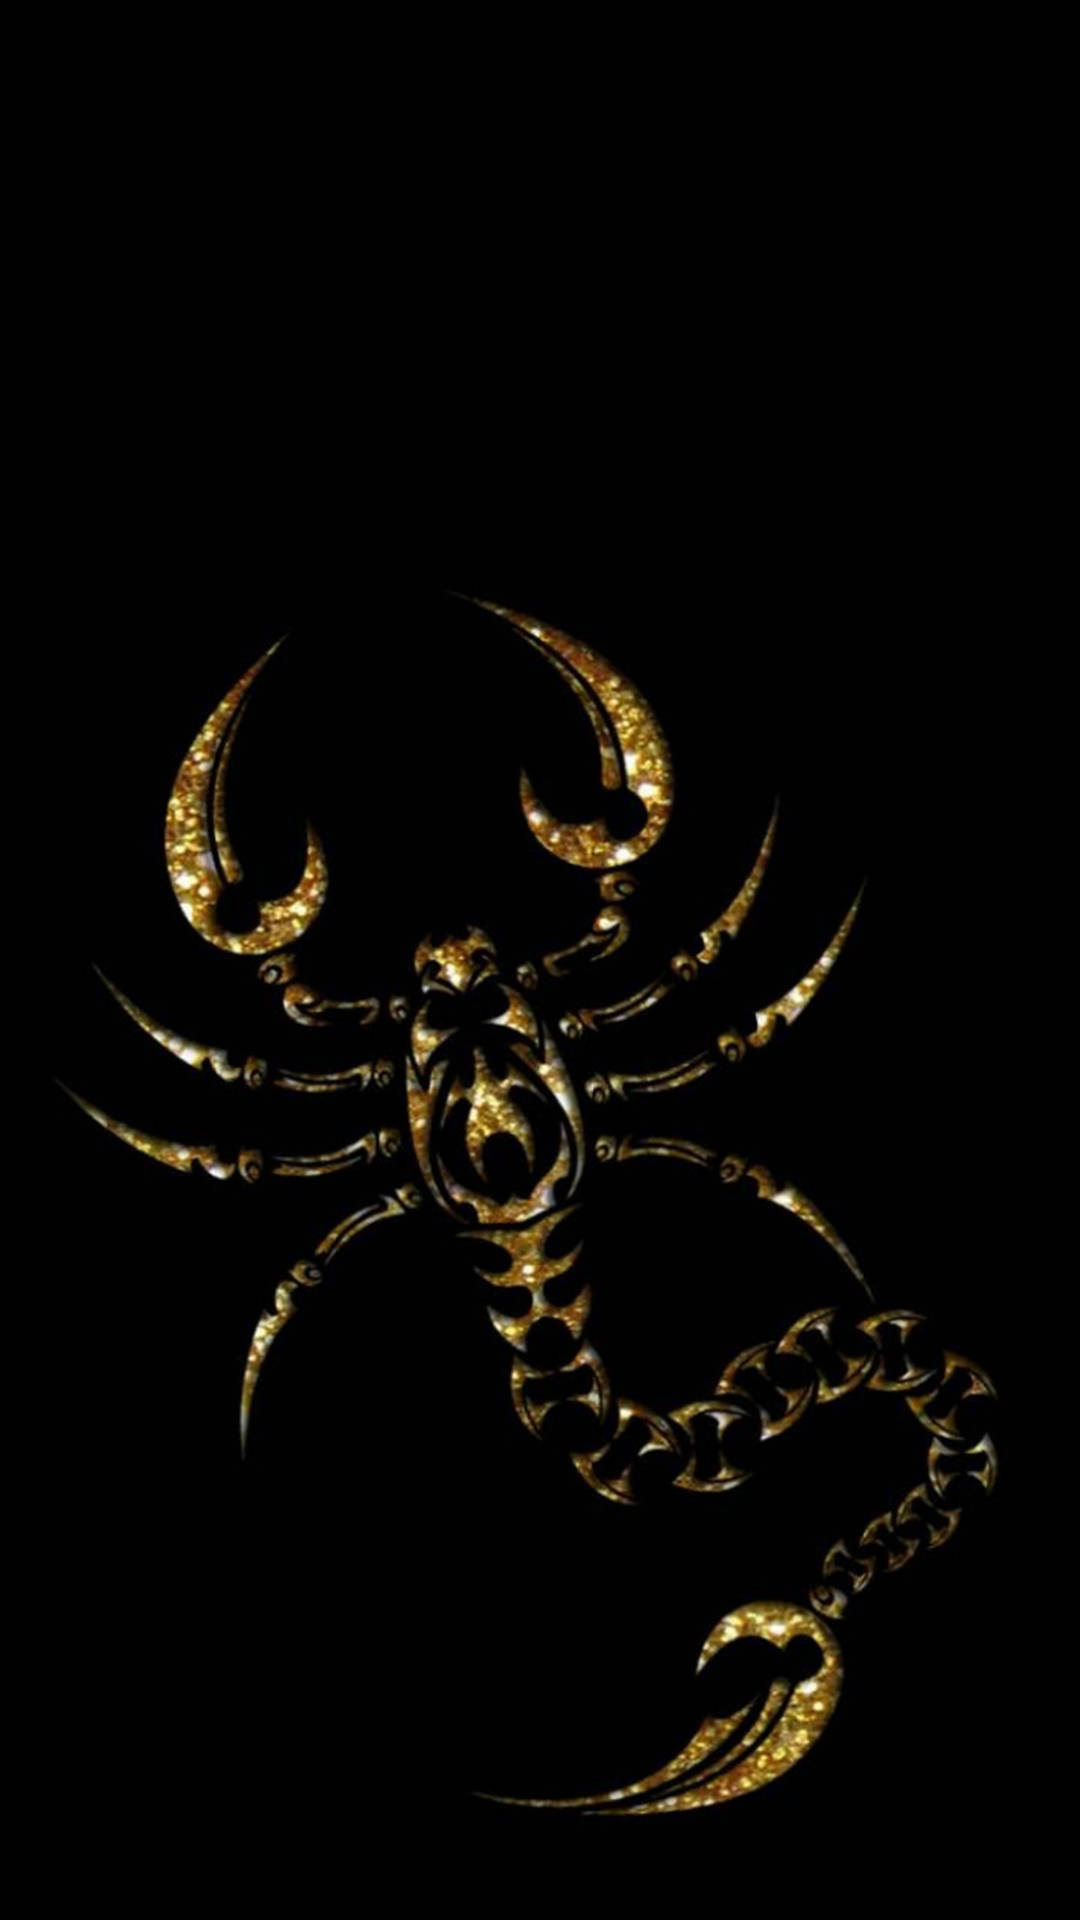 Scorpion Gold Aesthetic Art On Black Wallpaper